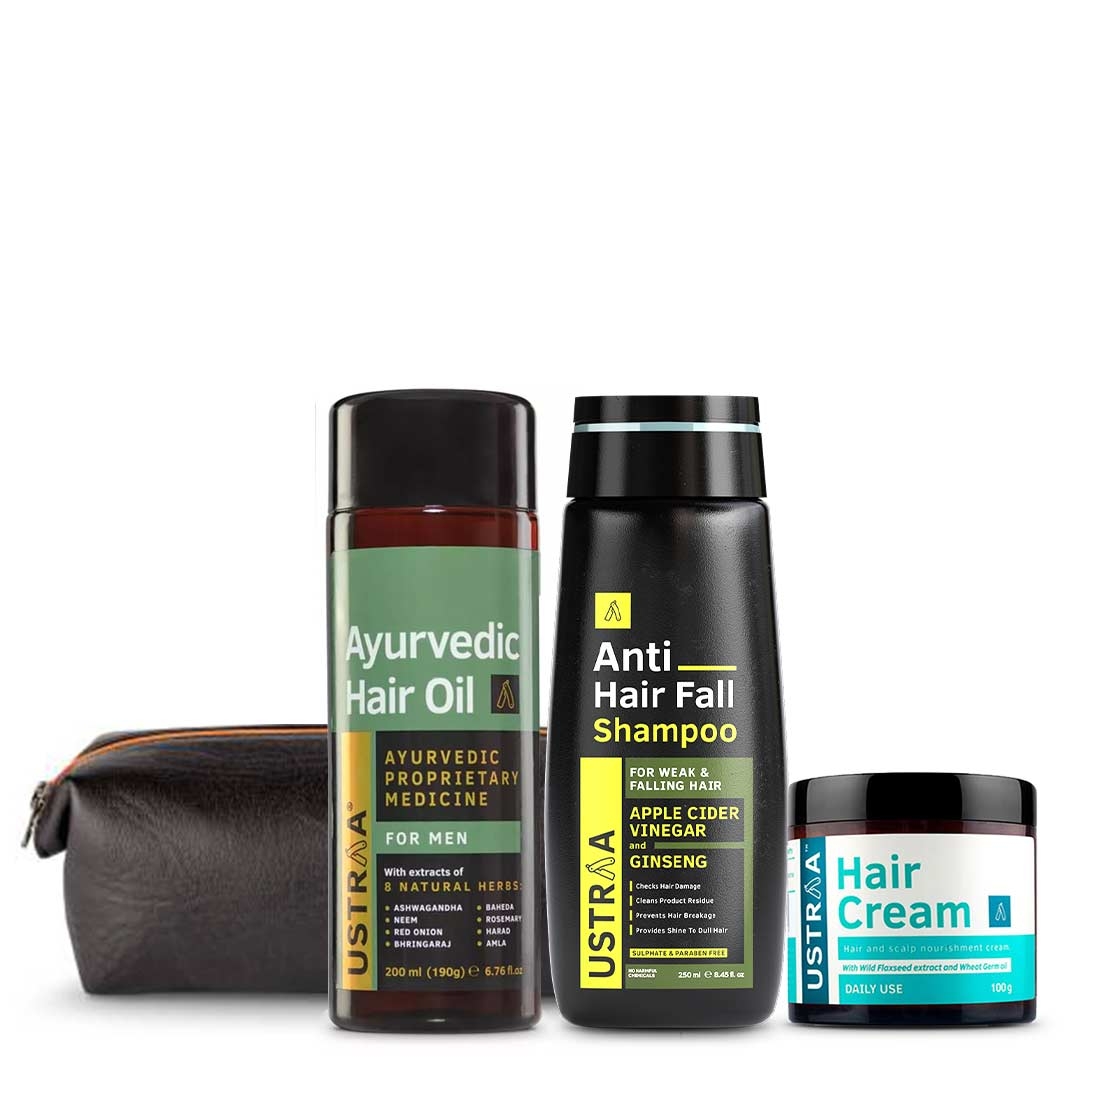 Ustraa | Ustraa Hair Lover Kit (Ayurvedic Hair Oil 200ml, Anti Hair Fall Shampoo 200ml, Hair Cream Daily Use 100g, , Travel Kit - PU Bag)